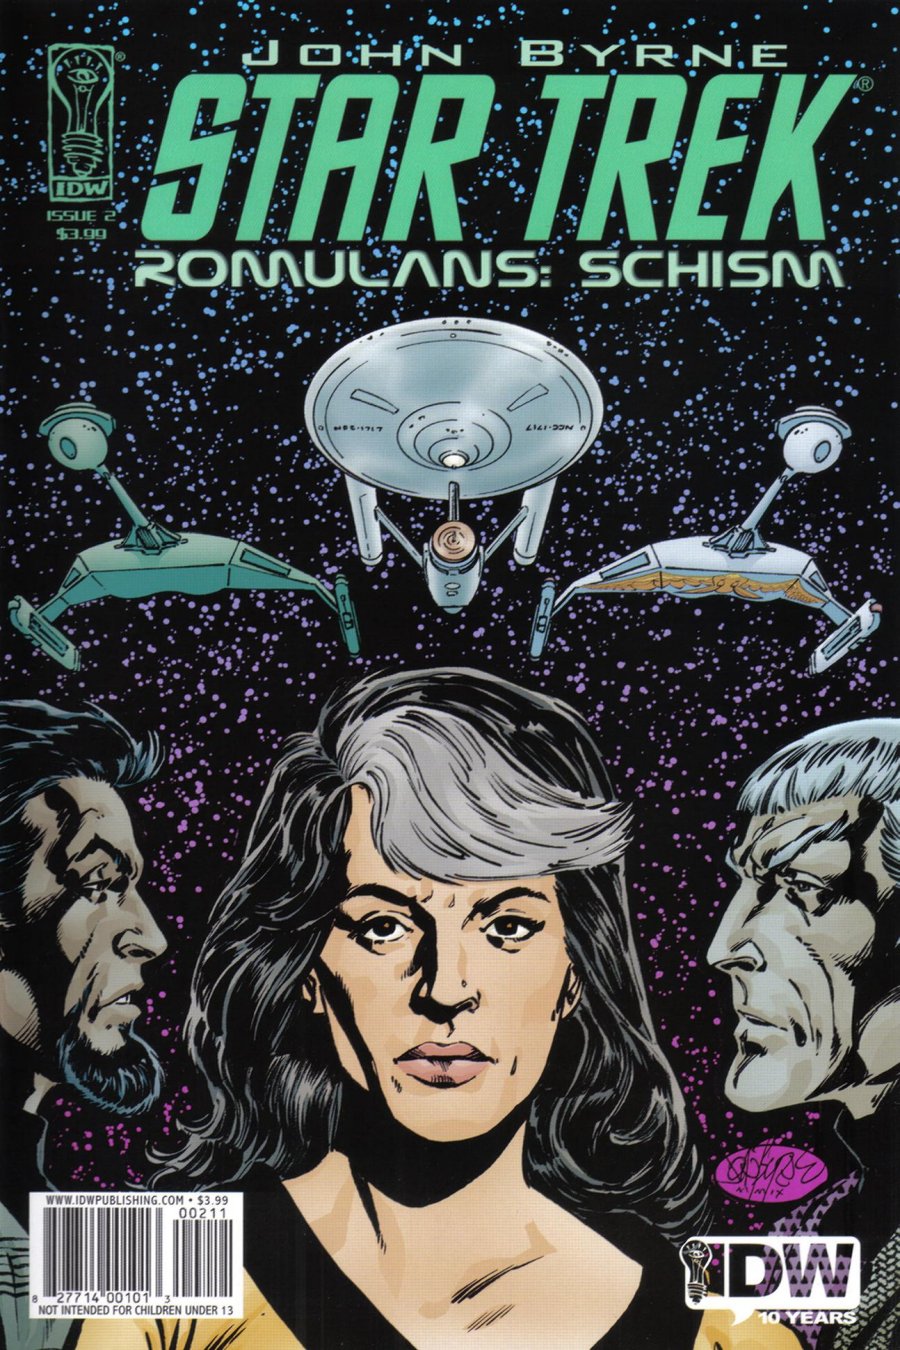 Romulans schism.